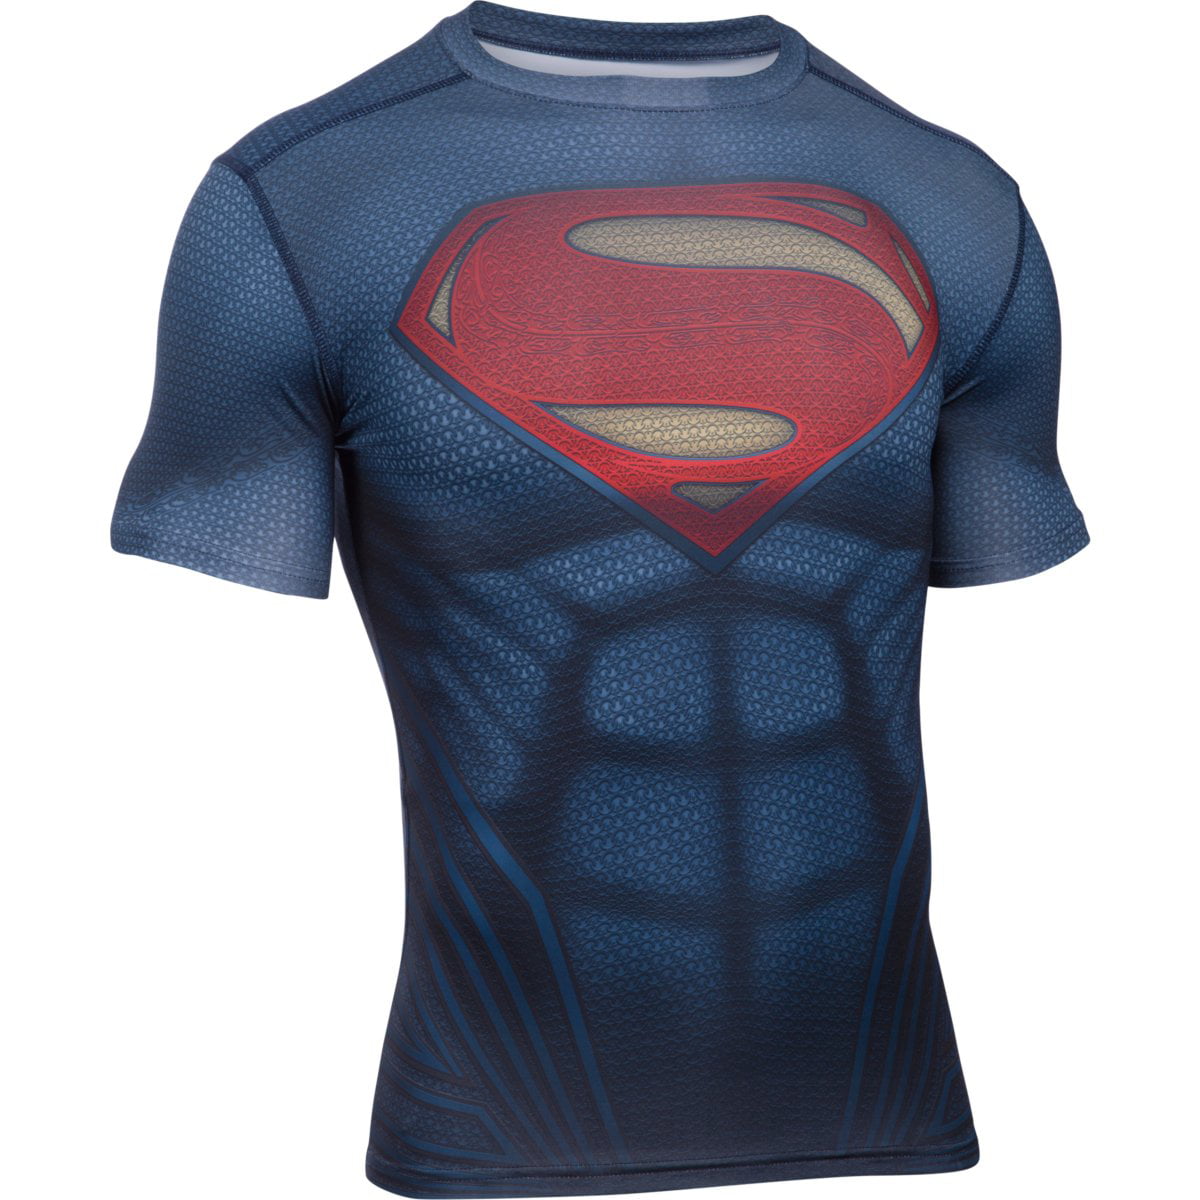 Under Armour Ego Superman Shirt MD Midnight Navy - Walmart.com